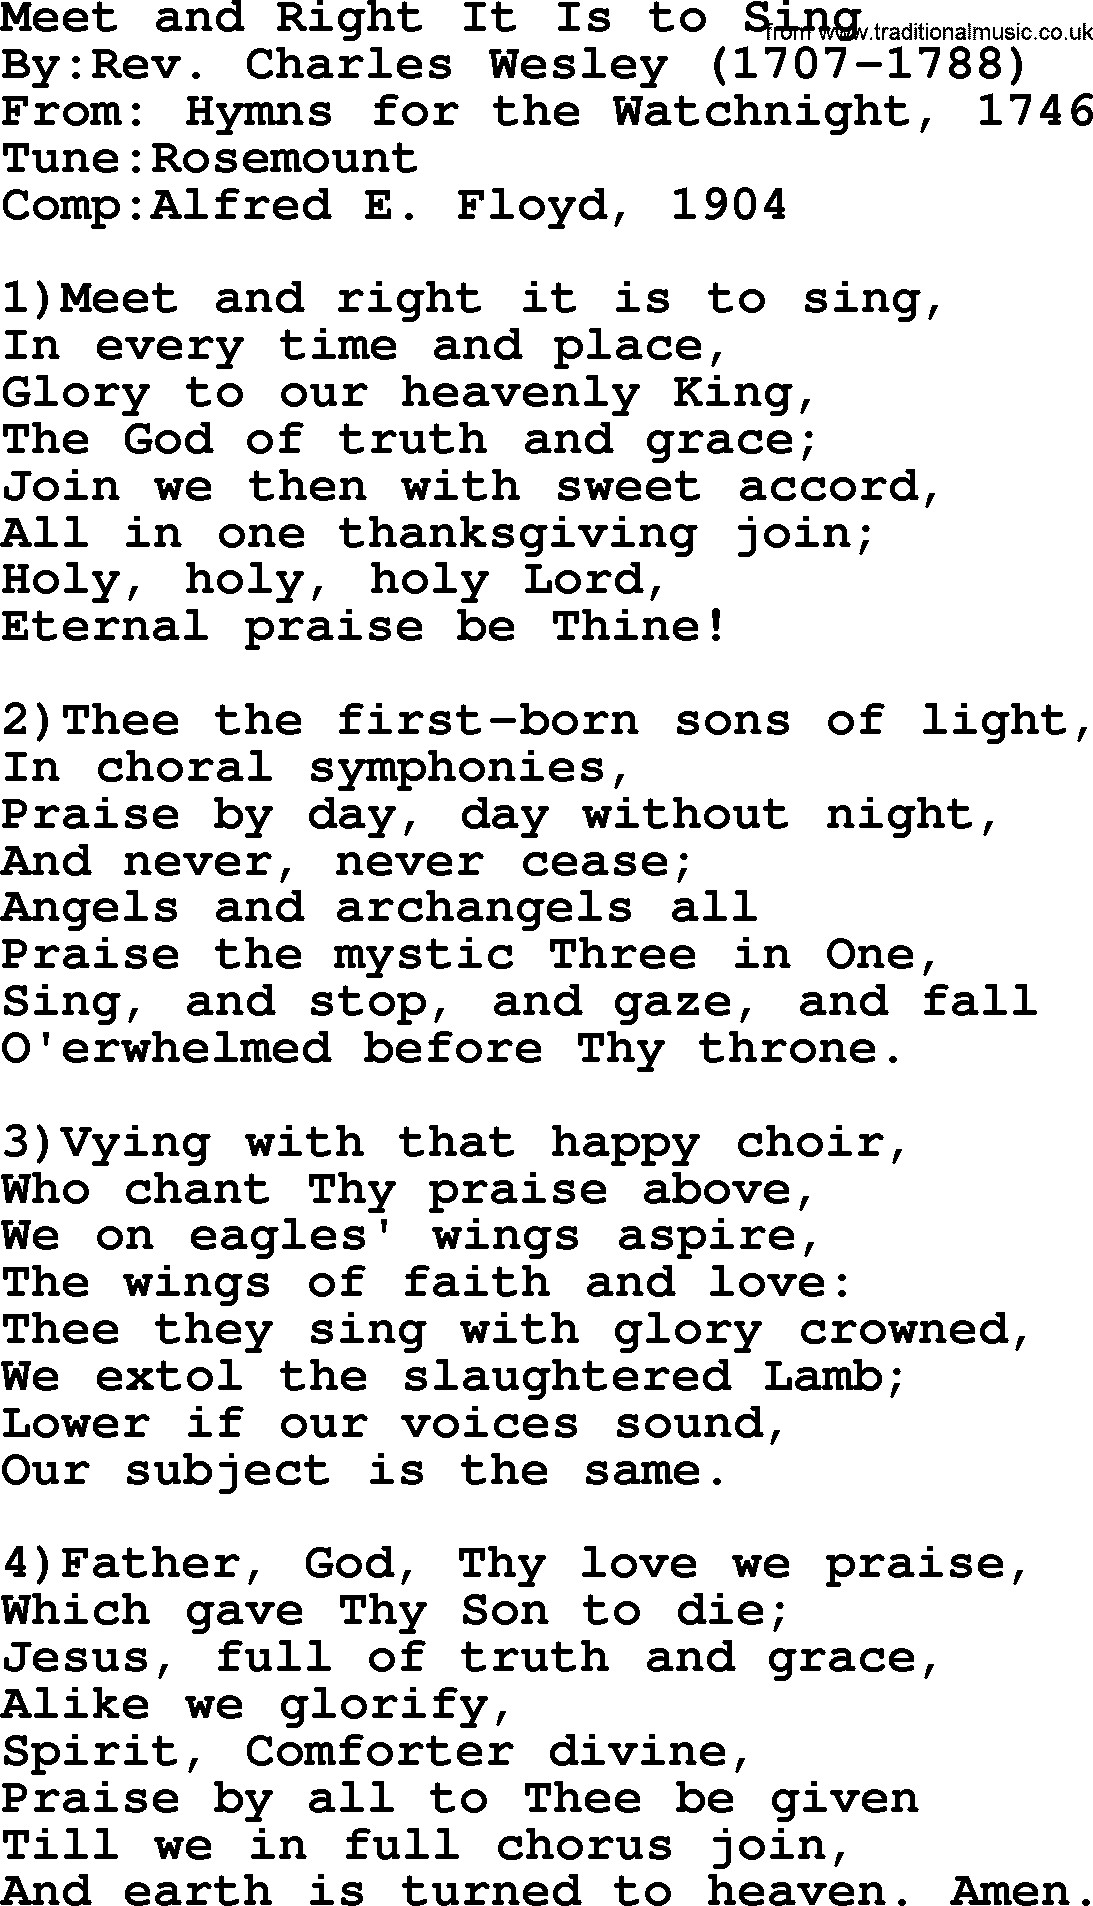 Methodist Hymn: Meet And Right It Is To Sing, lyrics